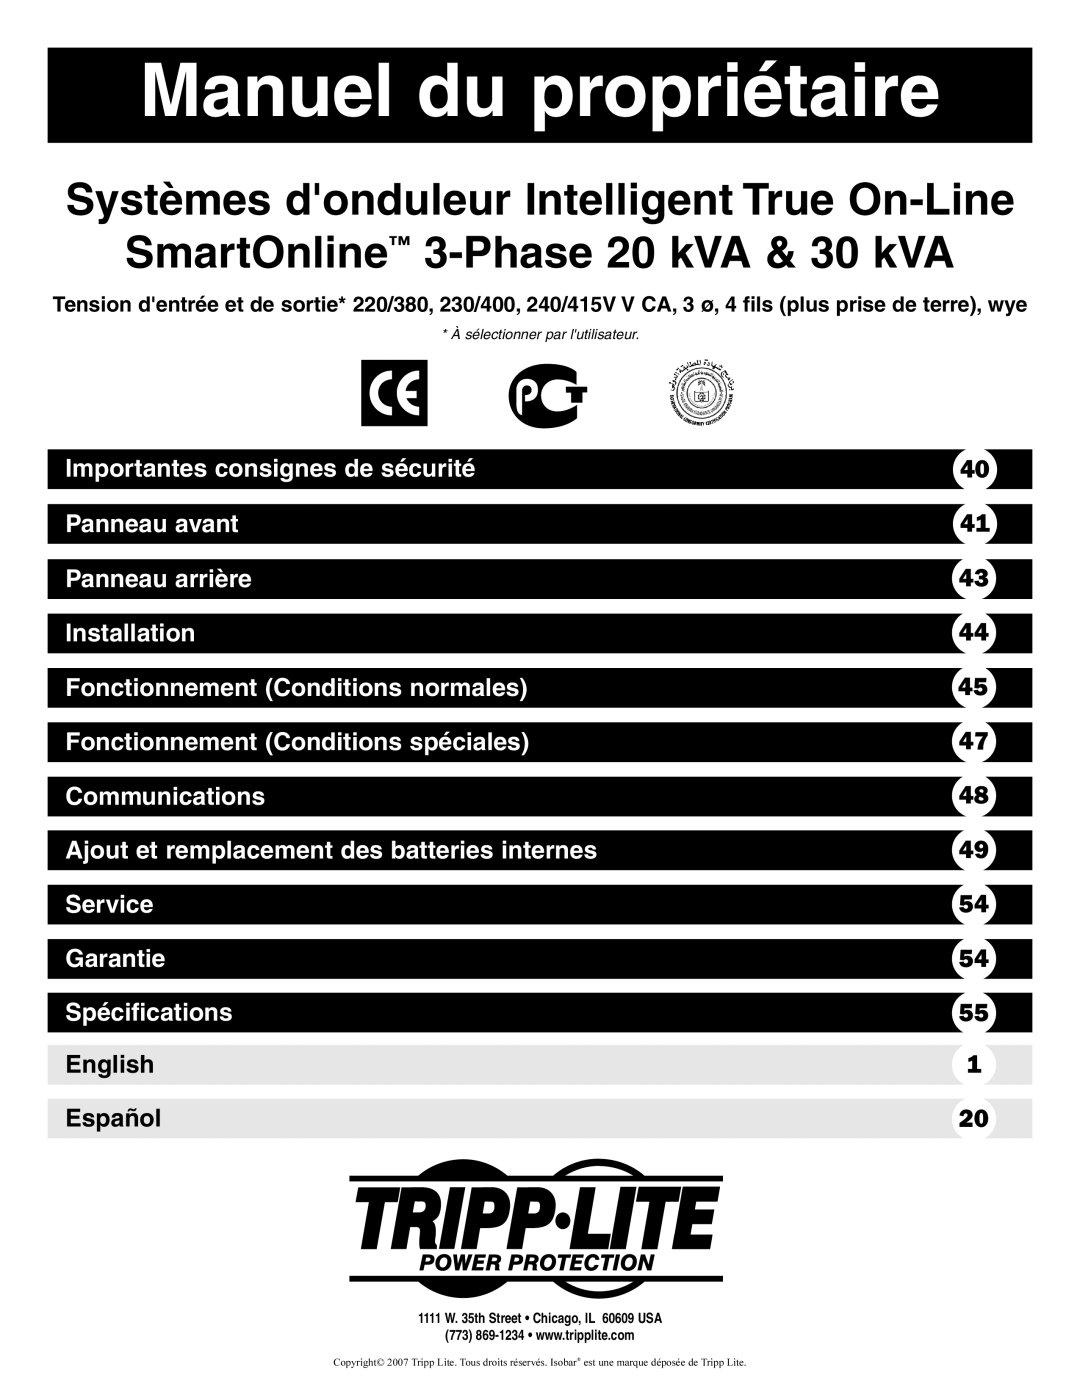 Tripp Lite Power Supply owner manual Manuel du propriétaire, Systèmes donduleur Intelligent True On-Line, English, Español 